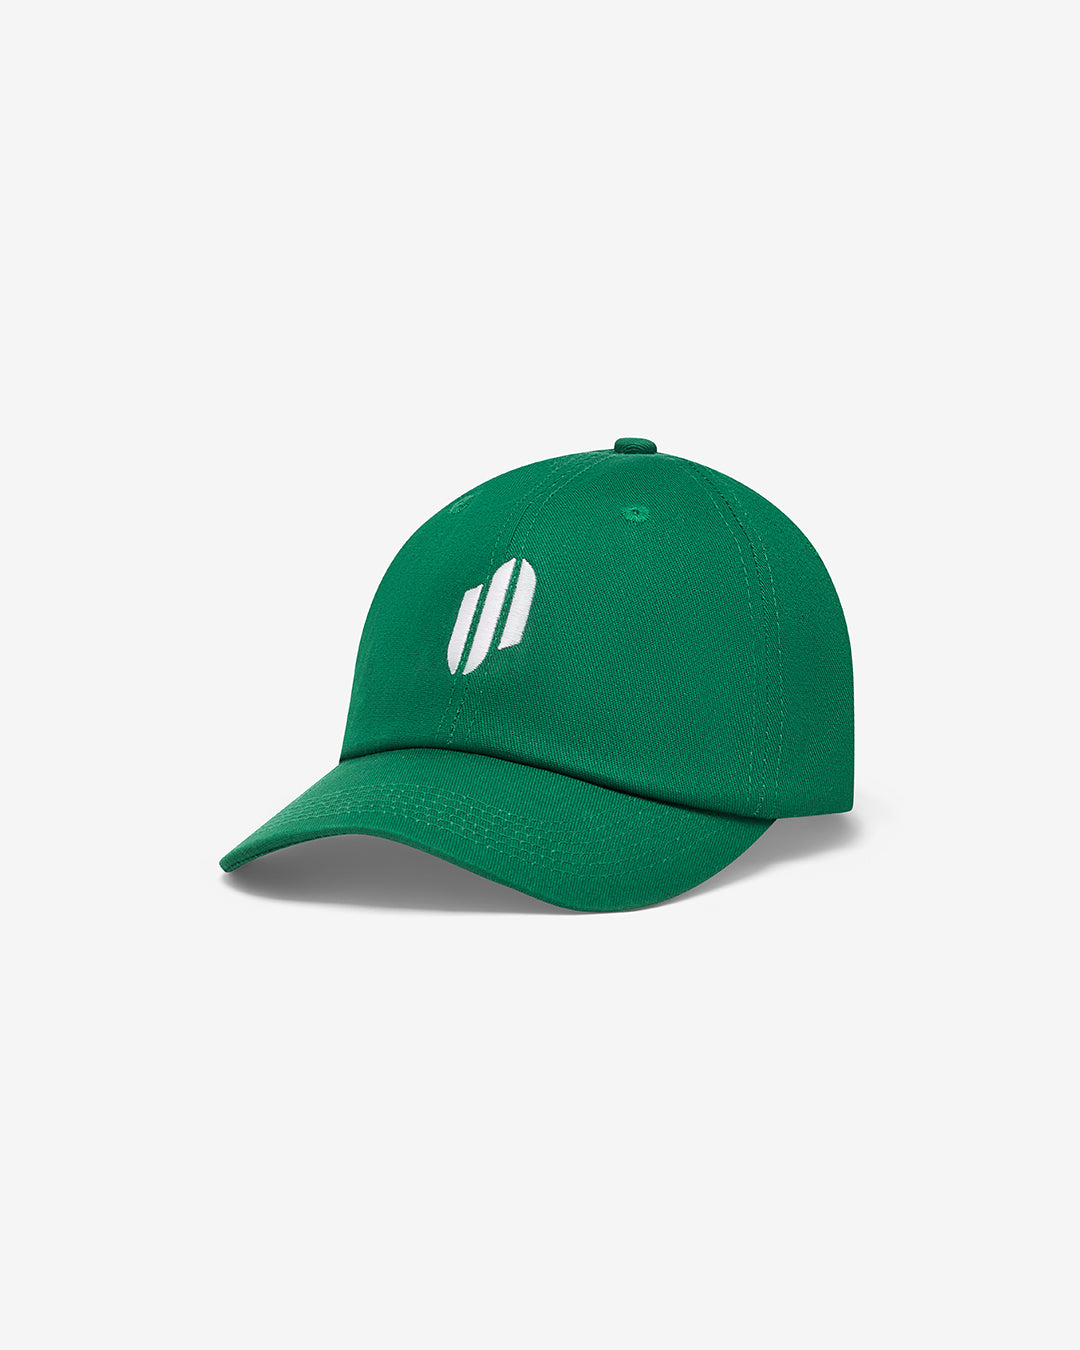 U:0221 - Baseball Cap - Green